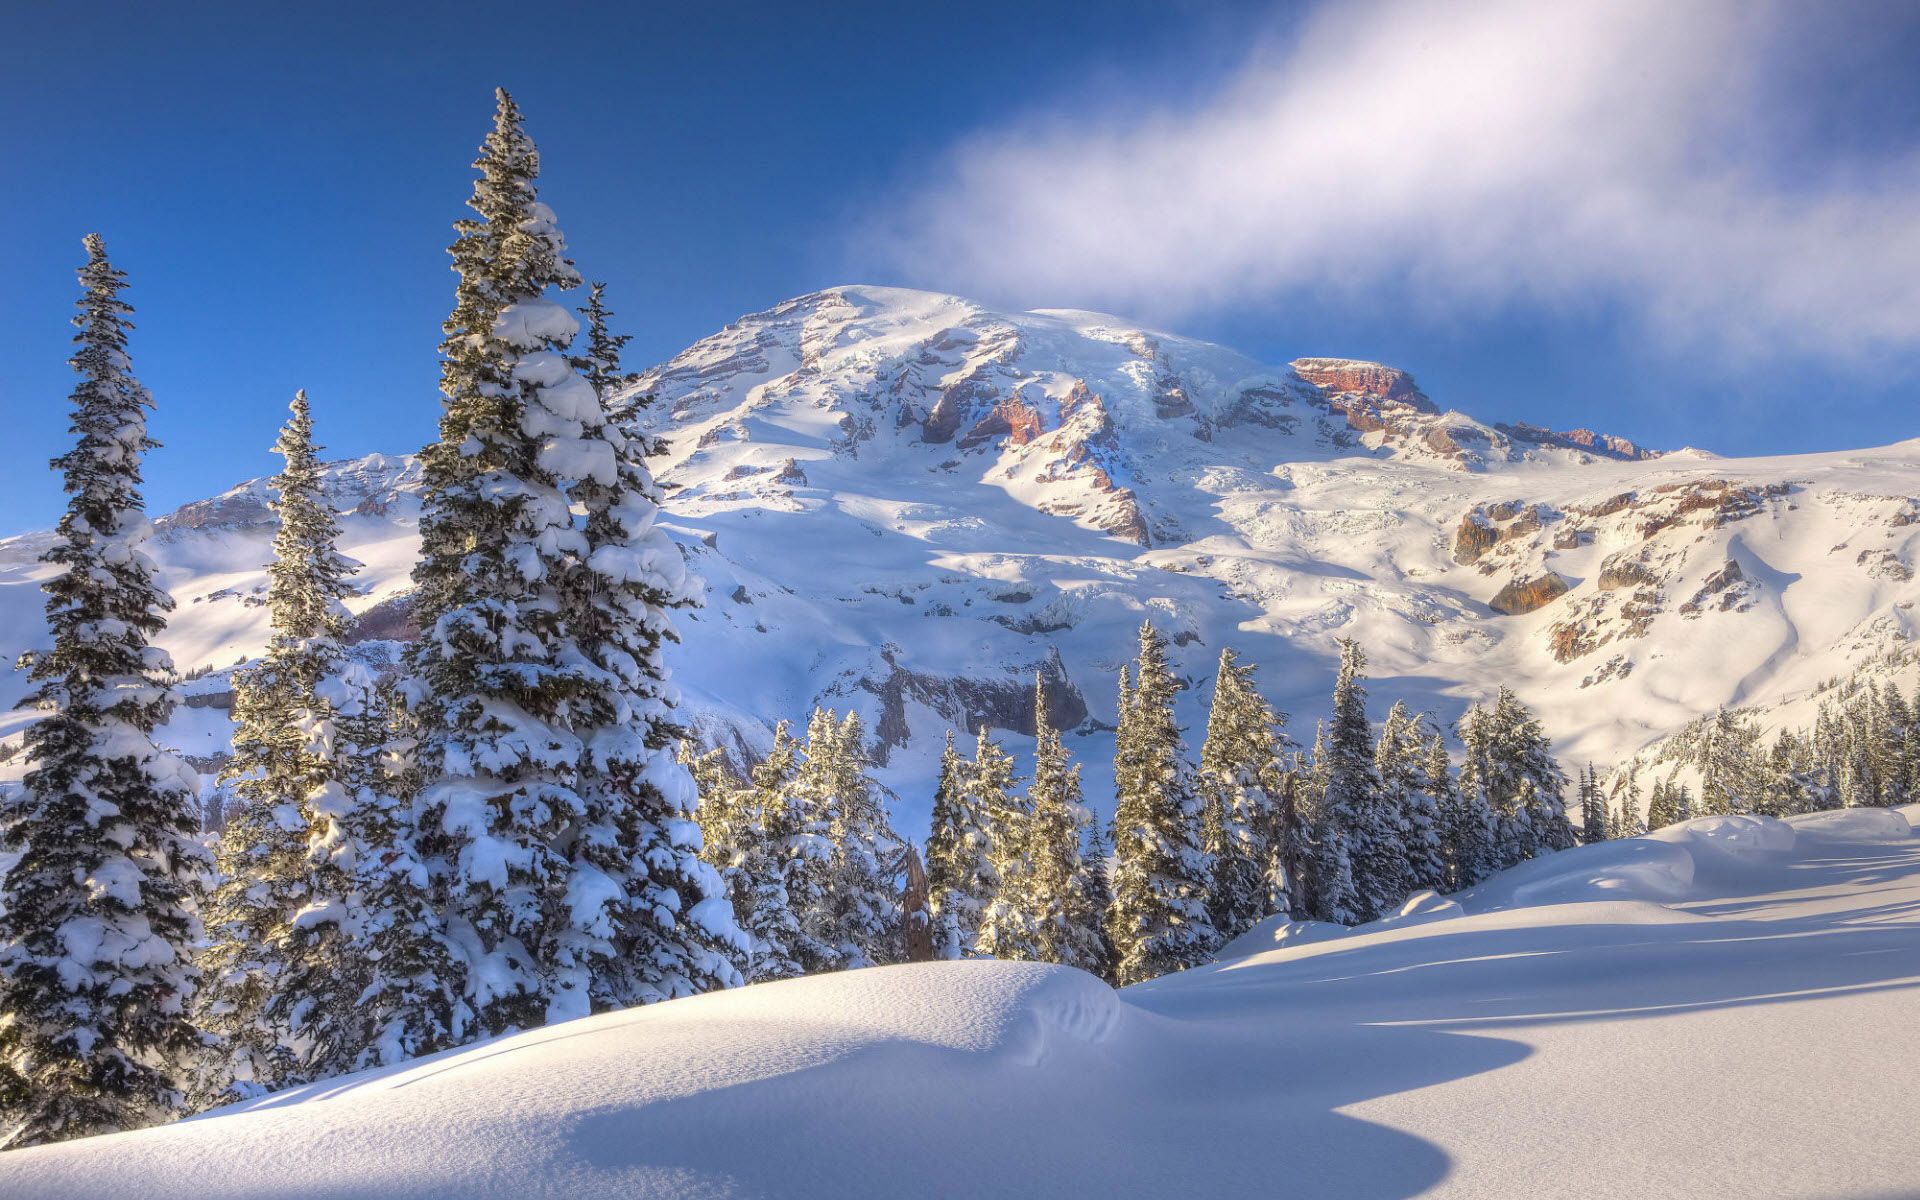 Washington State winter | Washington | Pinterest | Mountain ...